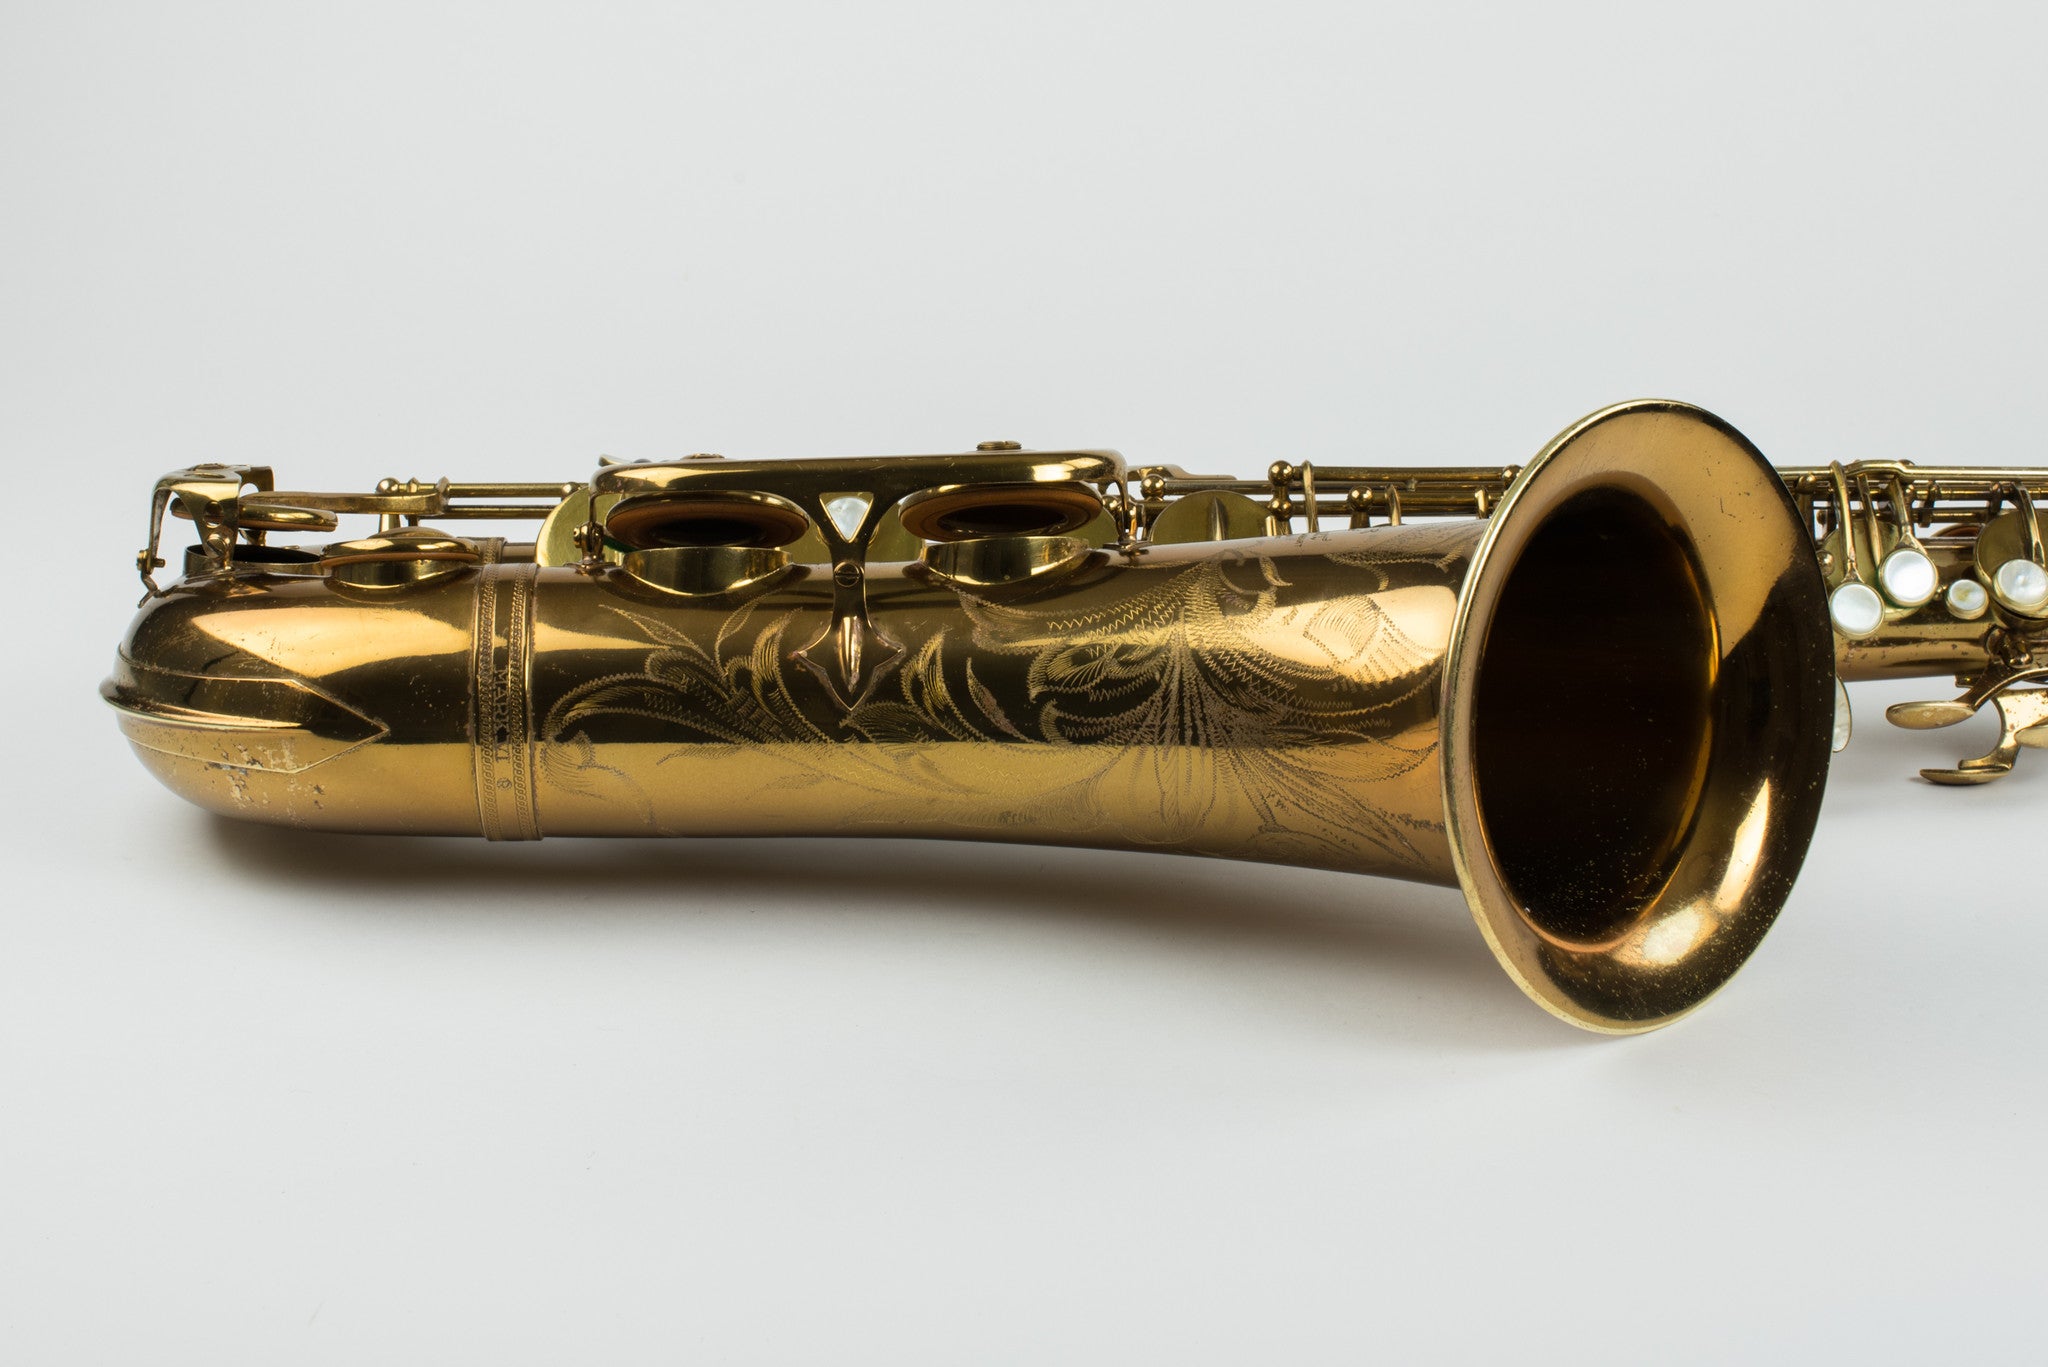 1962 Selmer Mark VI Tenor Saxophone 101,xxx, 97% ORIGINAL LACQUER, CHRIS POTTER S/N